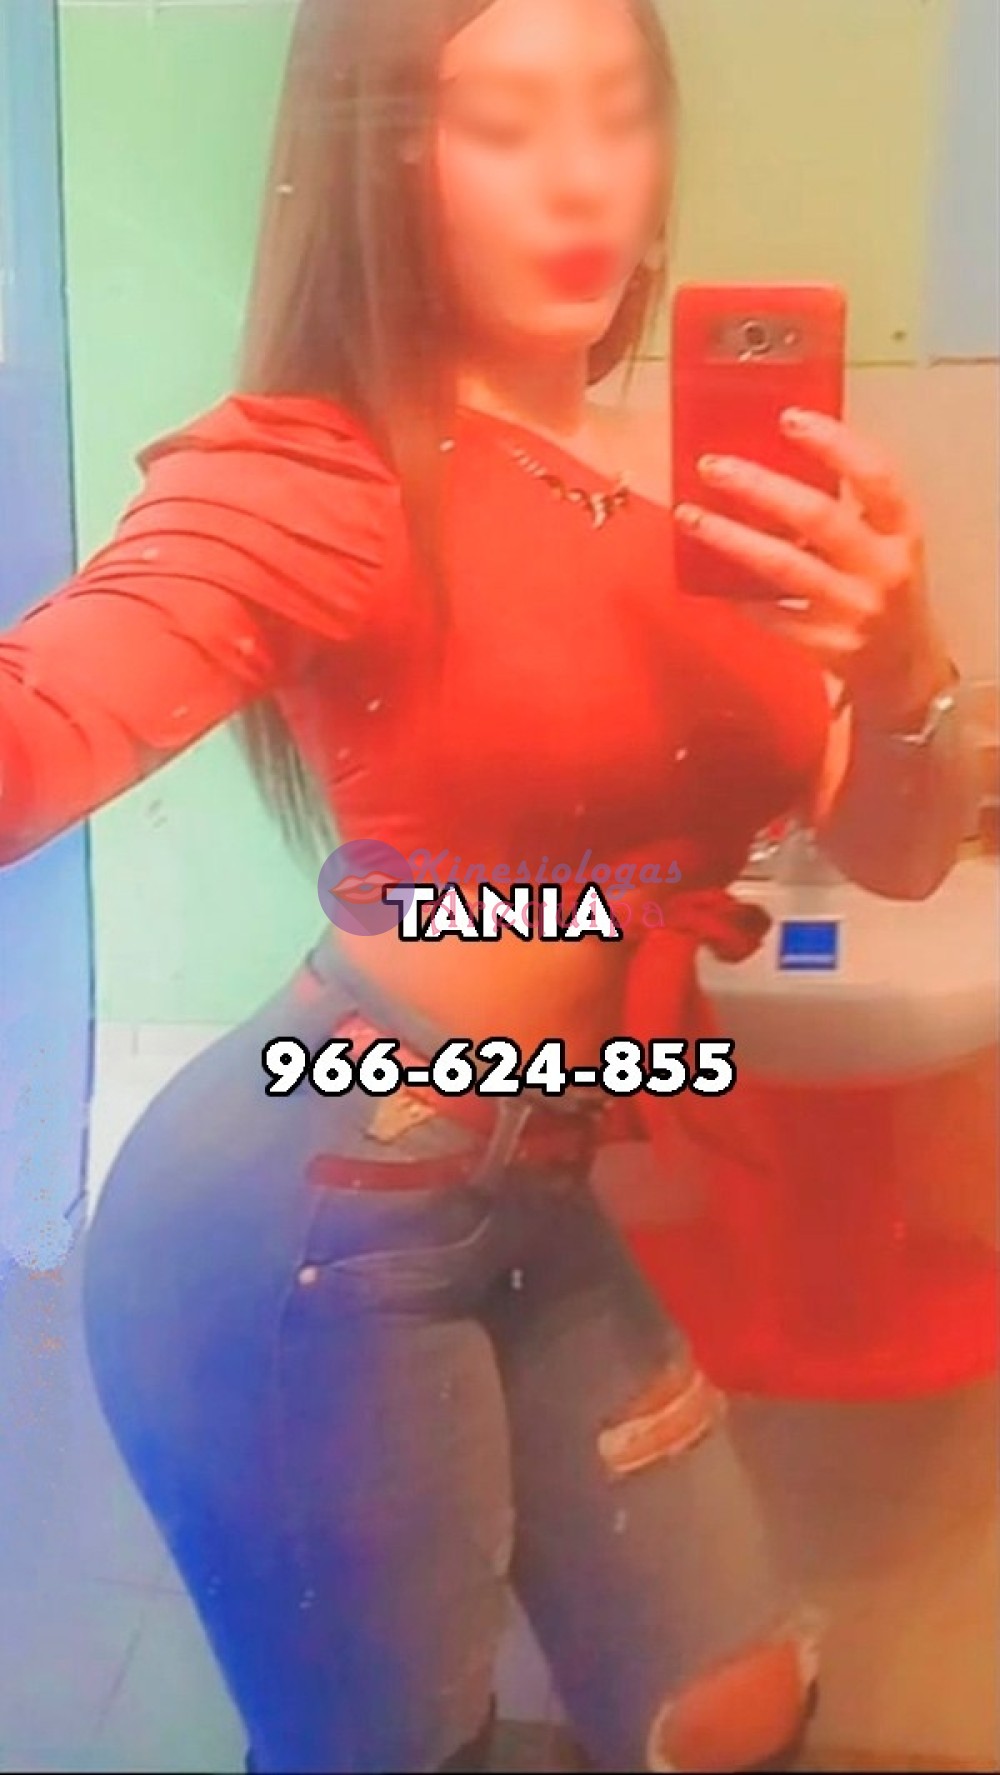 TANIA 966624855 BLANCONA CULONA GOLOSA SUPER ARRECHA 